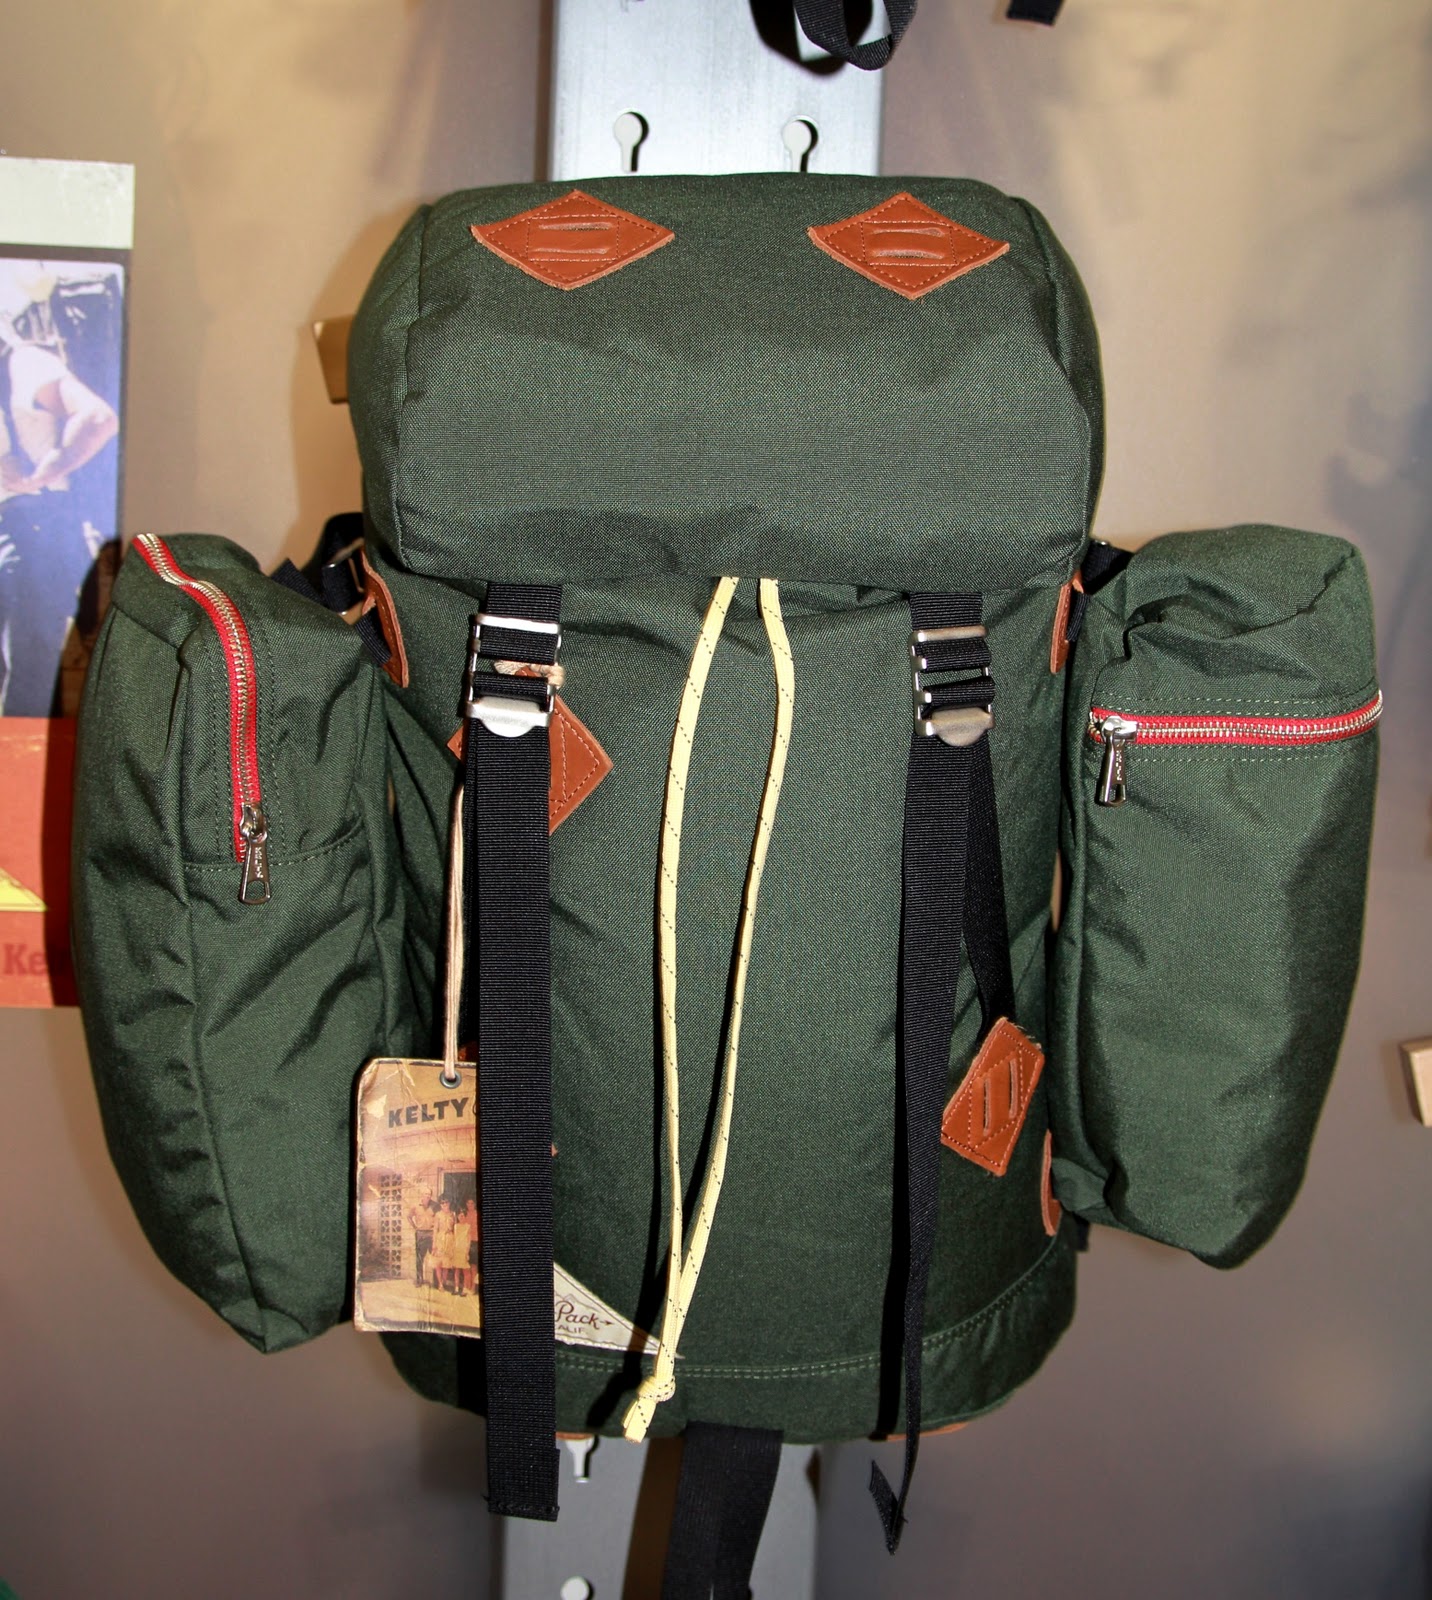 Joey Badass B4.Da Backpack Multi-Function School Casual Travel Hiking Daypack for Unisex